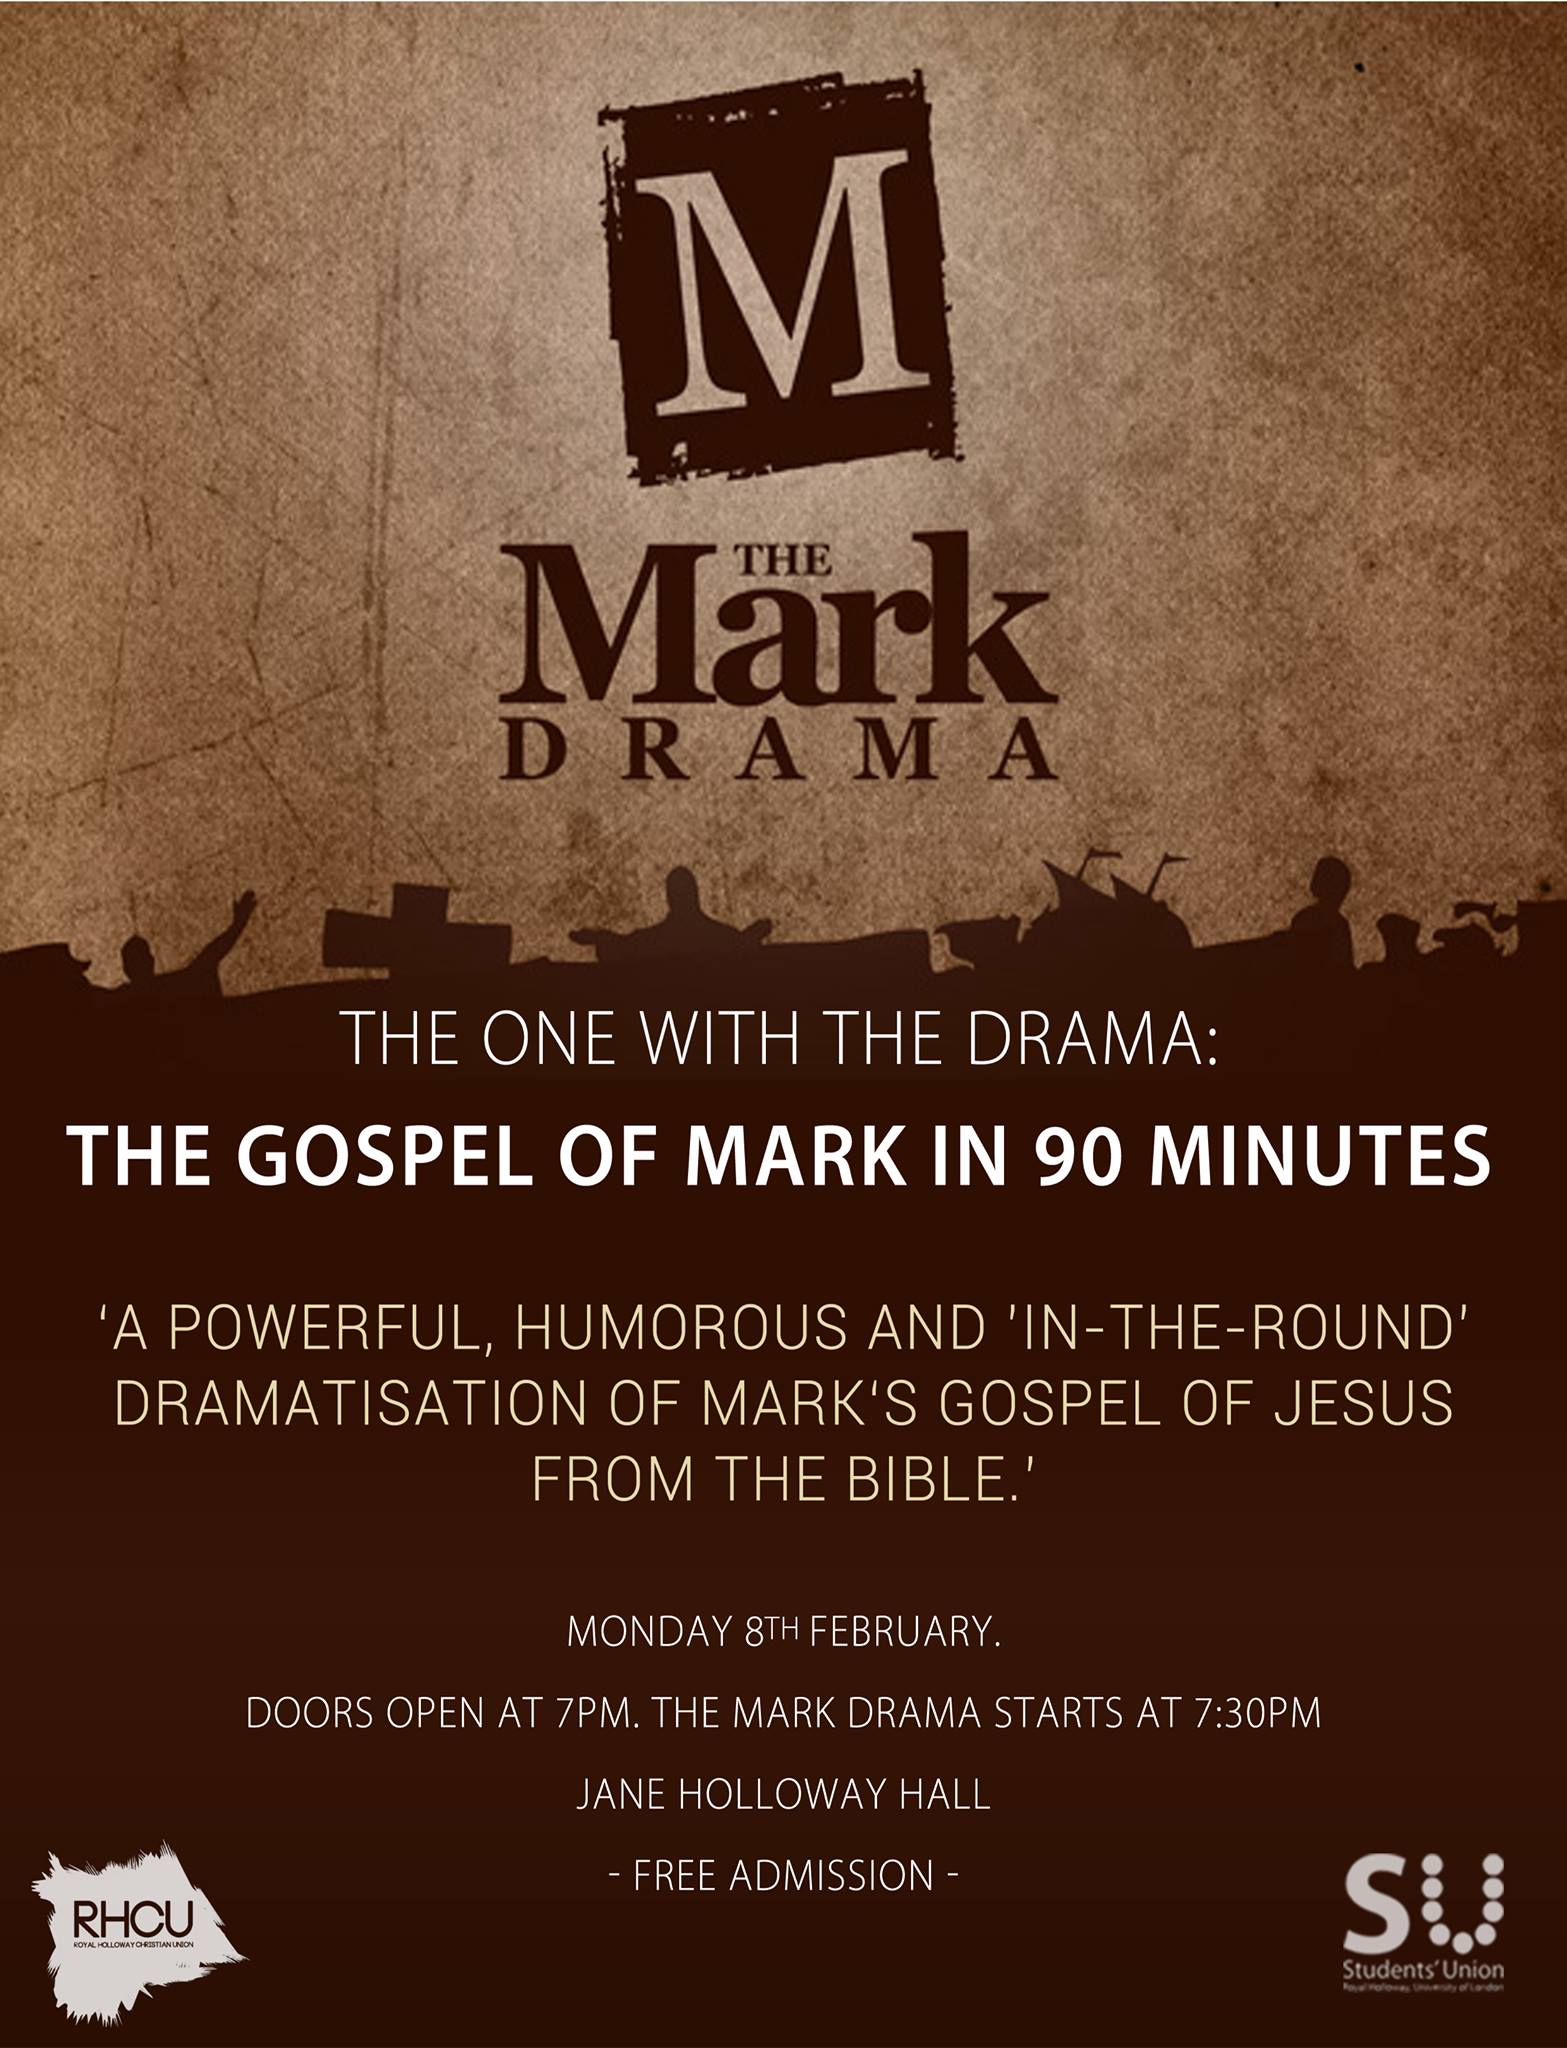 The Christian Union present the Mark Drama